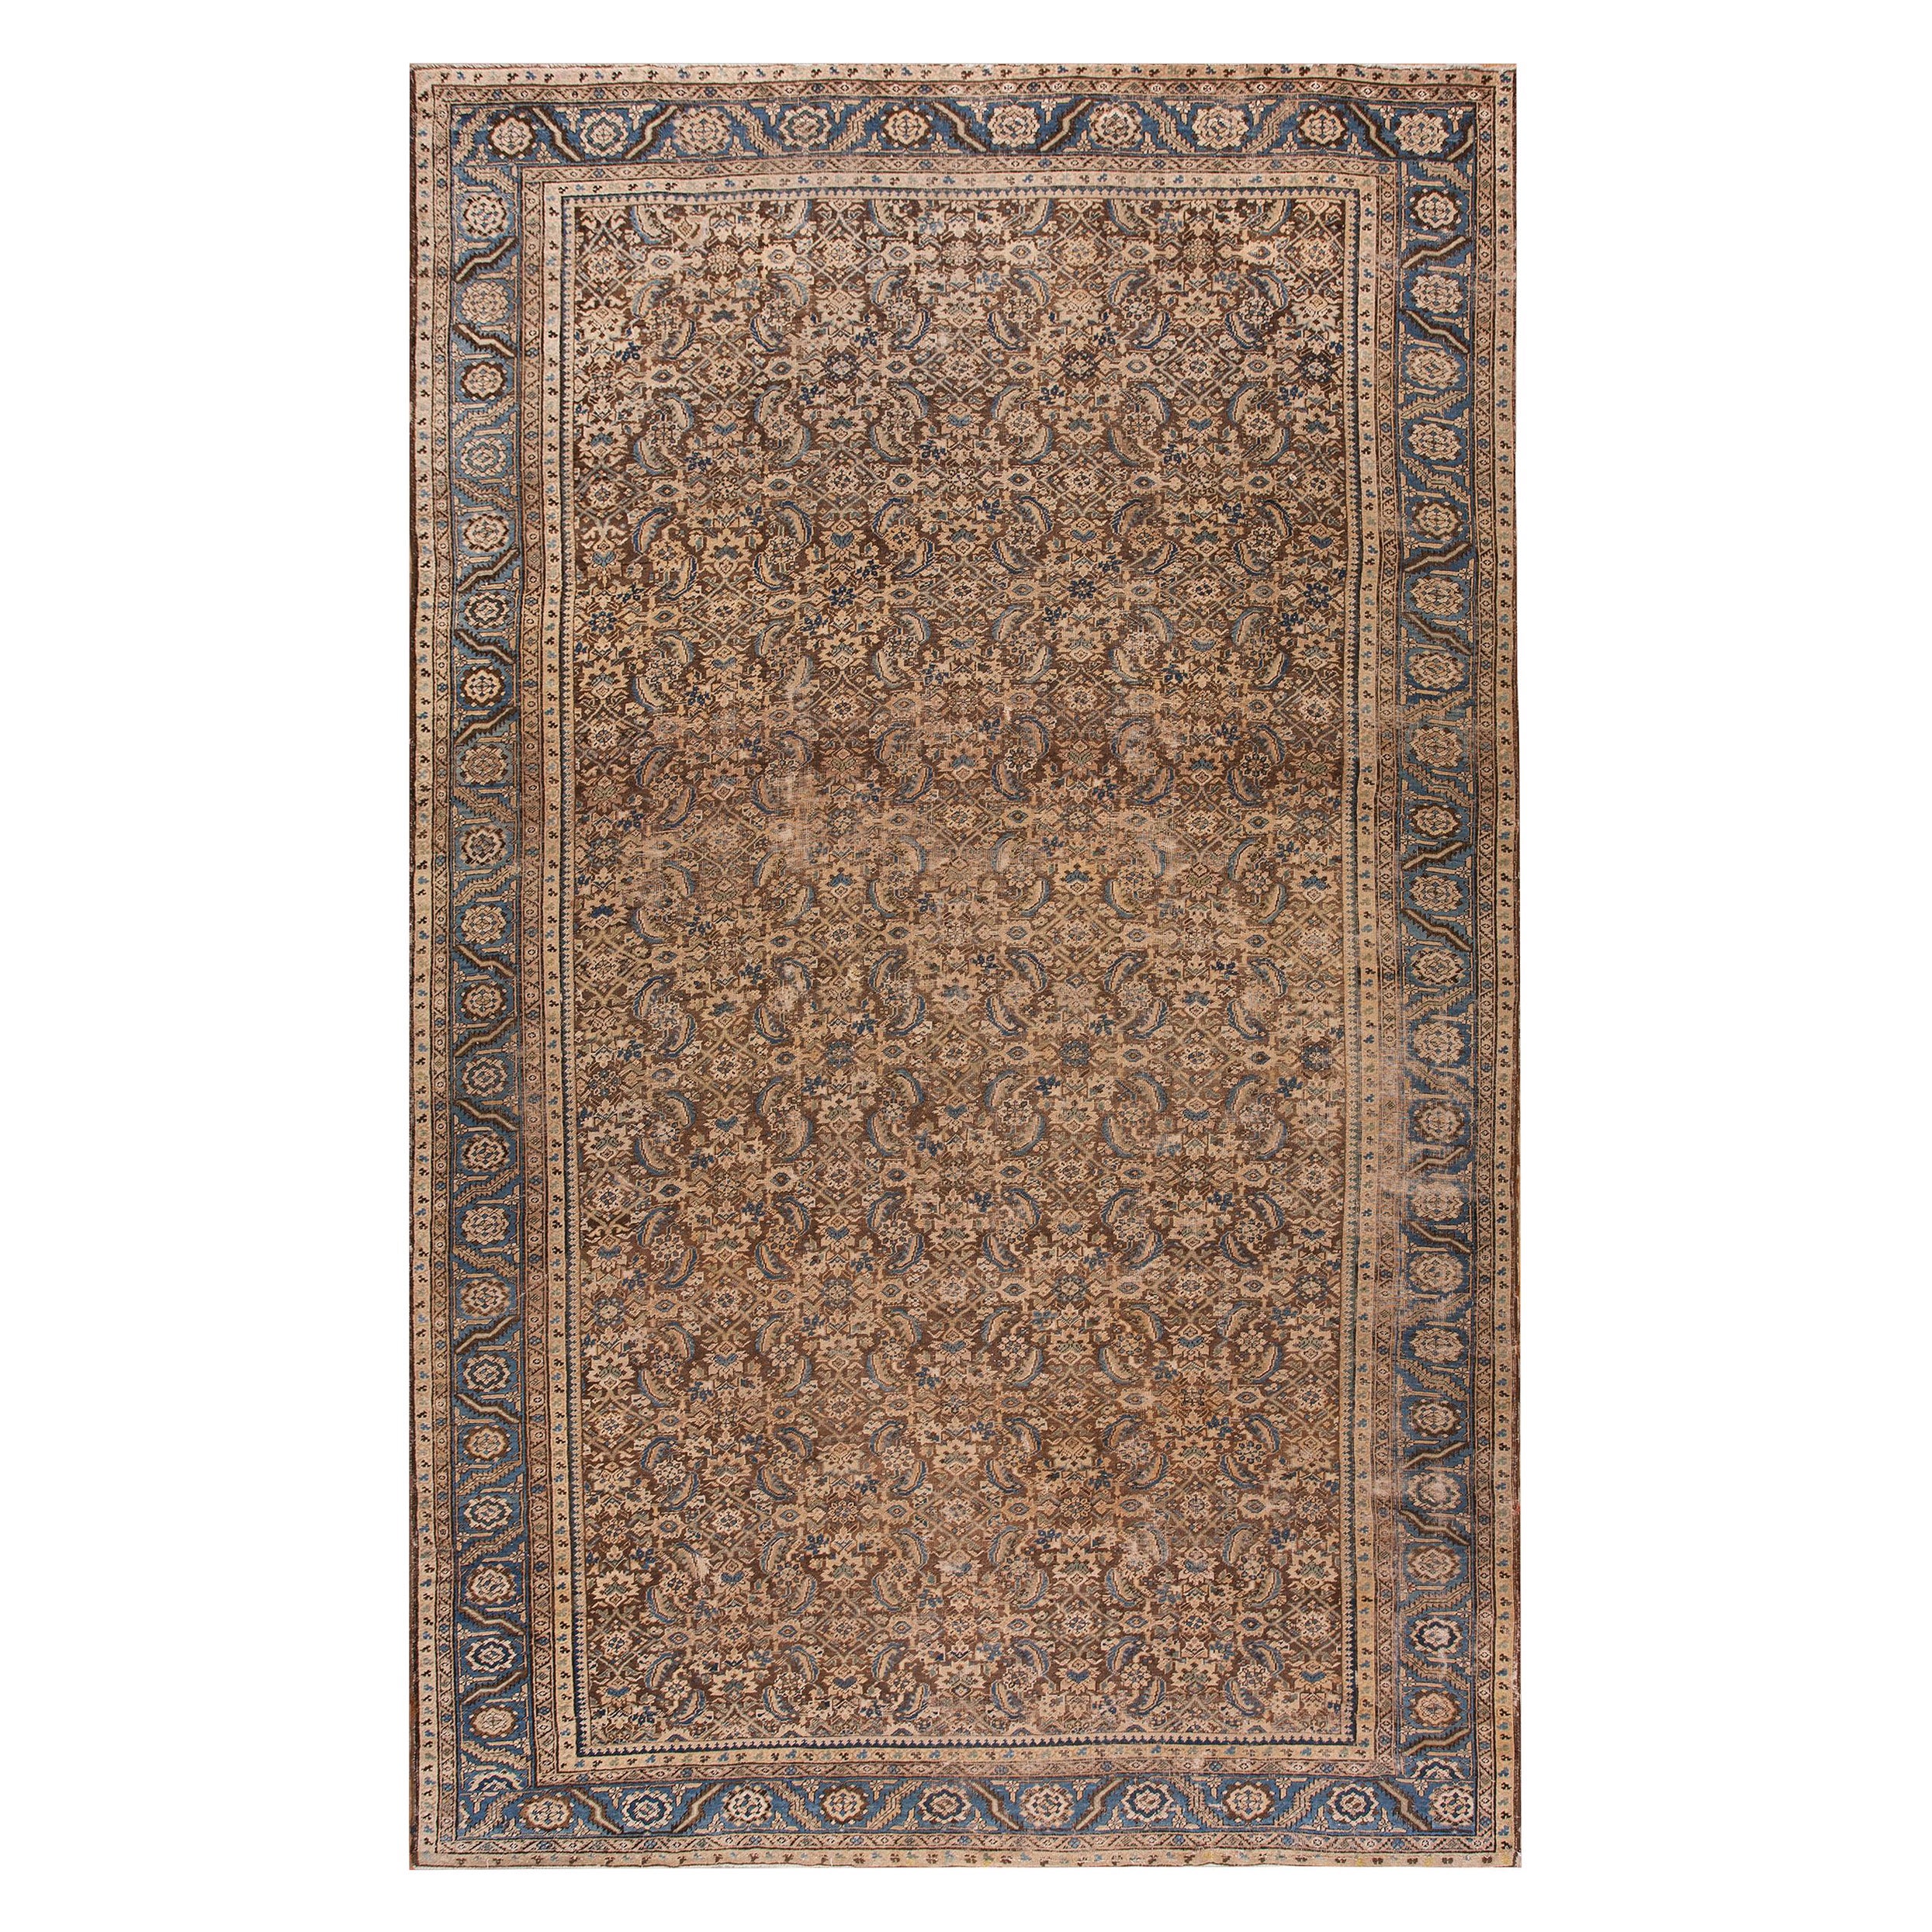 Late 19th Century NW Persian Bakshaish Carpet ( 9'2" x 15'2" - 279 x 464 cm) For Sale